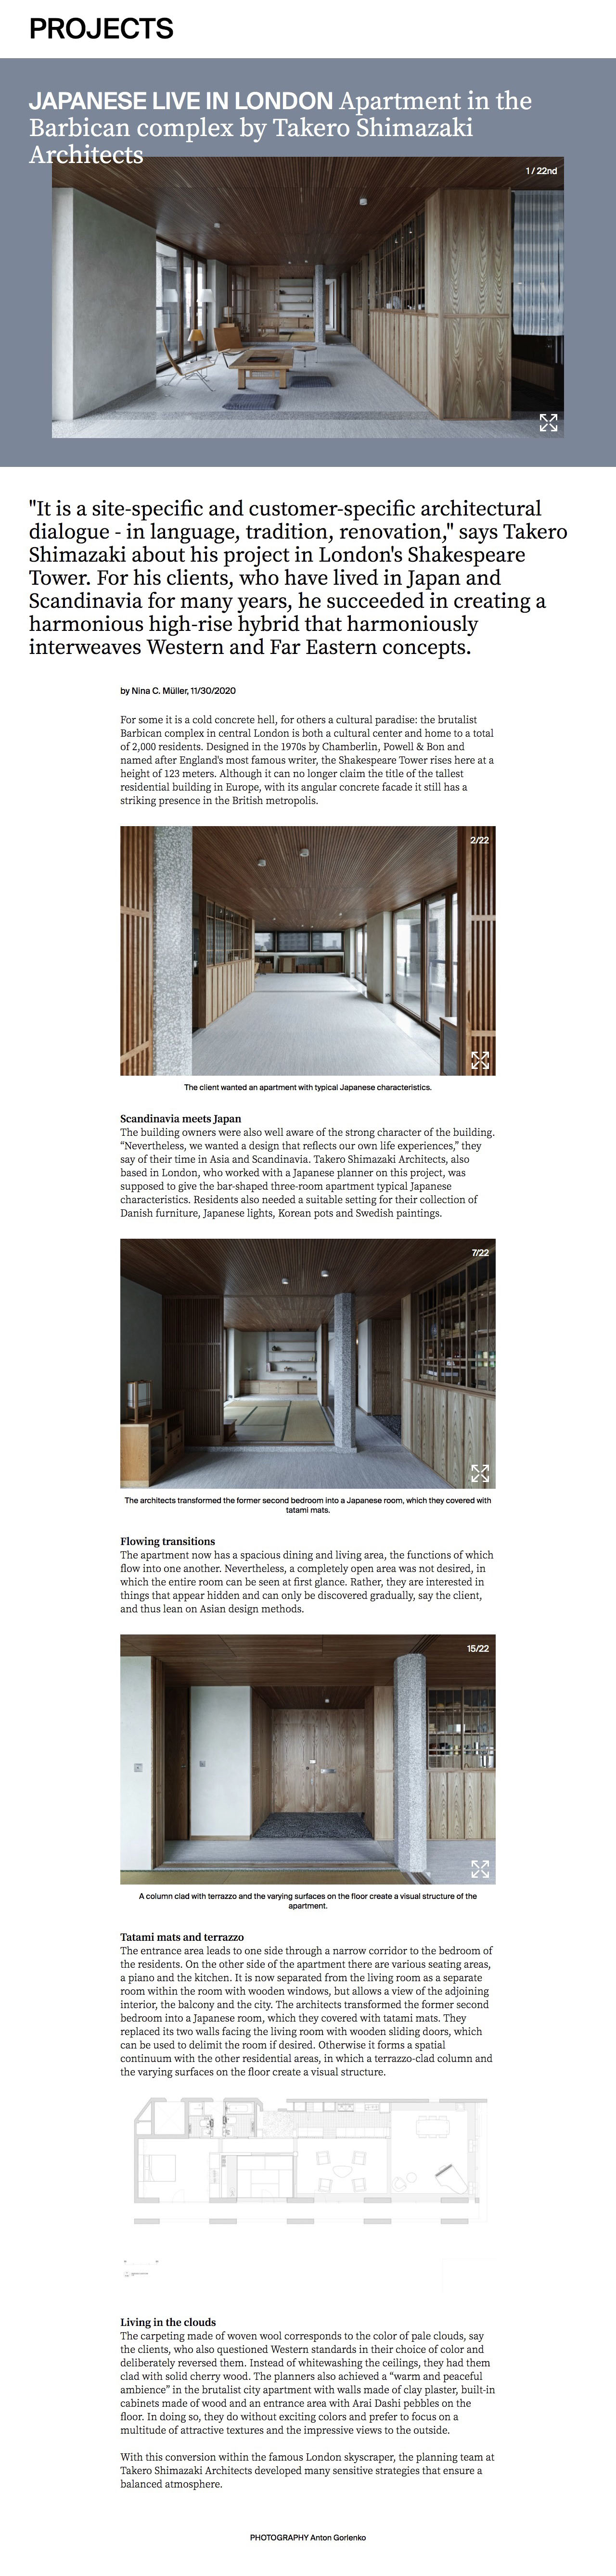 Japanese living in London - projects - baunetz interior design